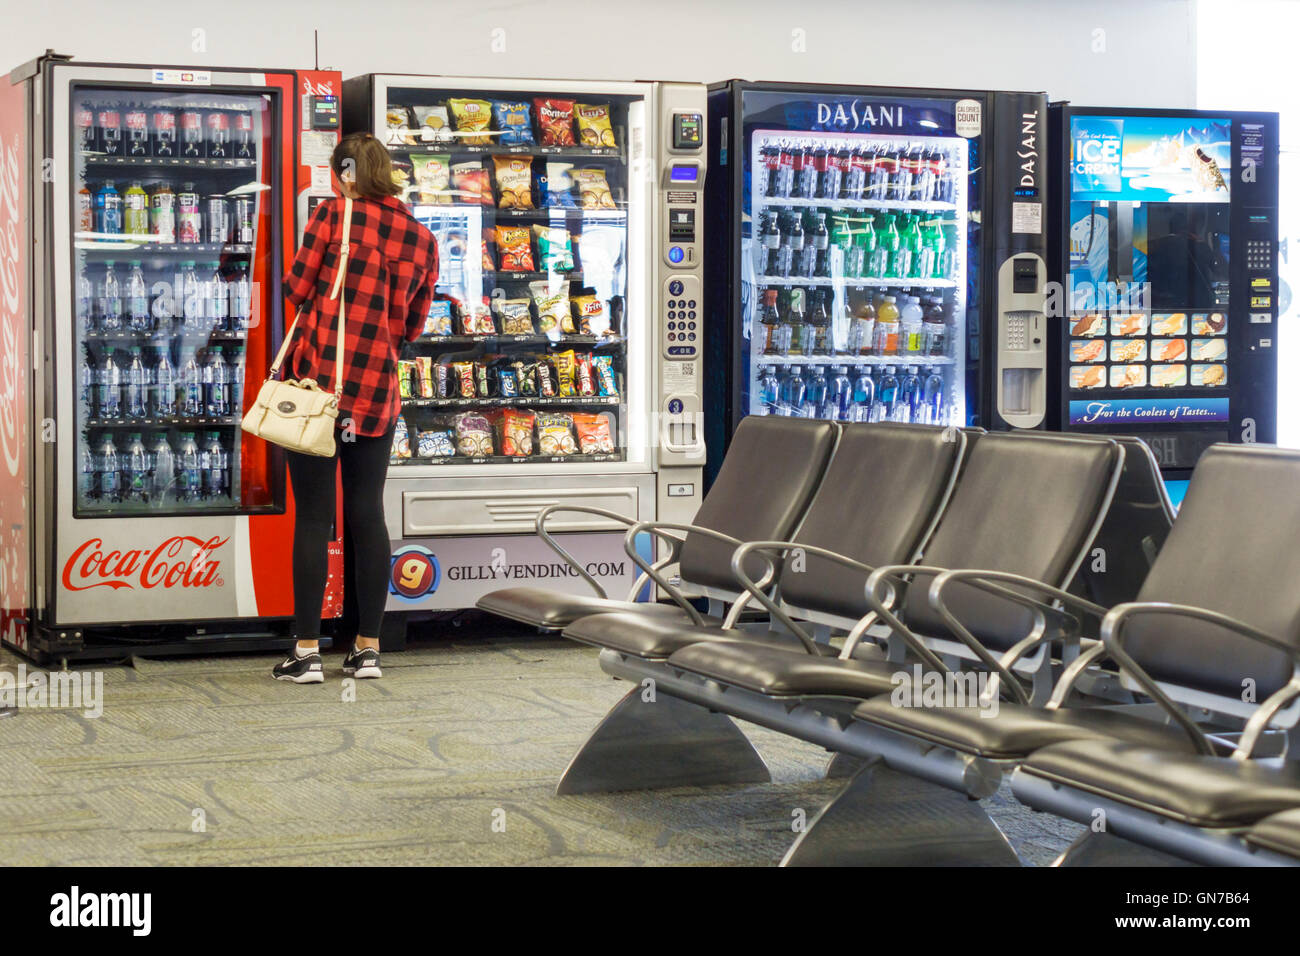 Miami Florida Aeropuerto Internacional MIA, aviación, terminal, puerta, máquina expendedora, agua, refrescos, refrescos, Coca-Cola, adultos adultos, mujeres, Foto de stock